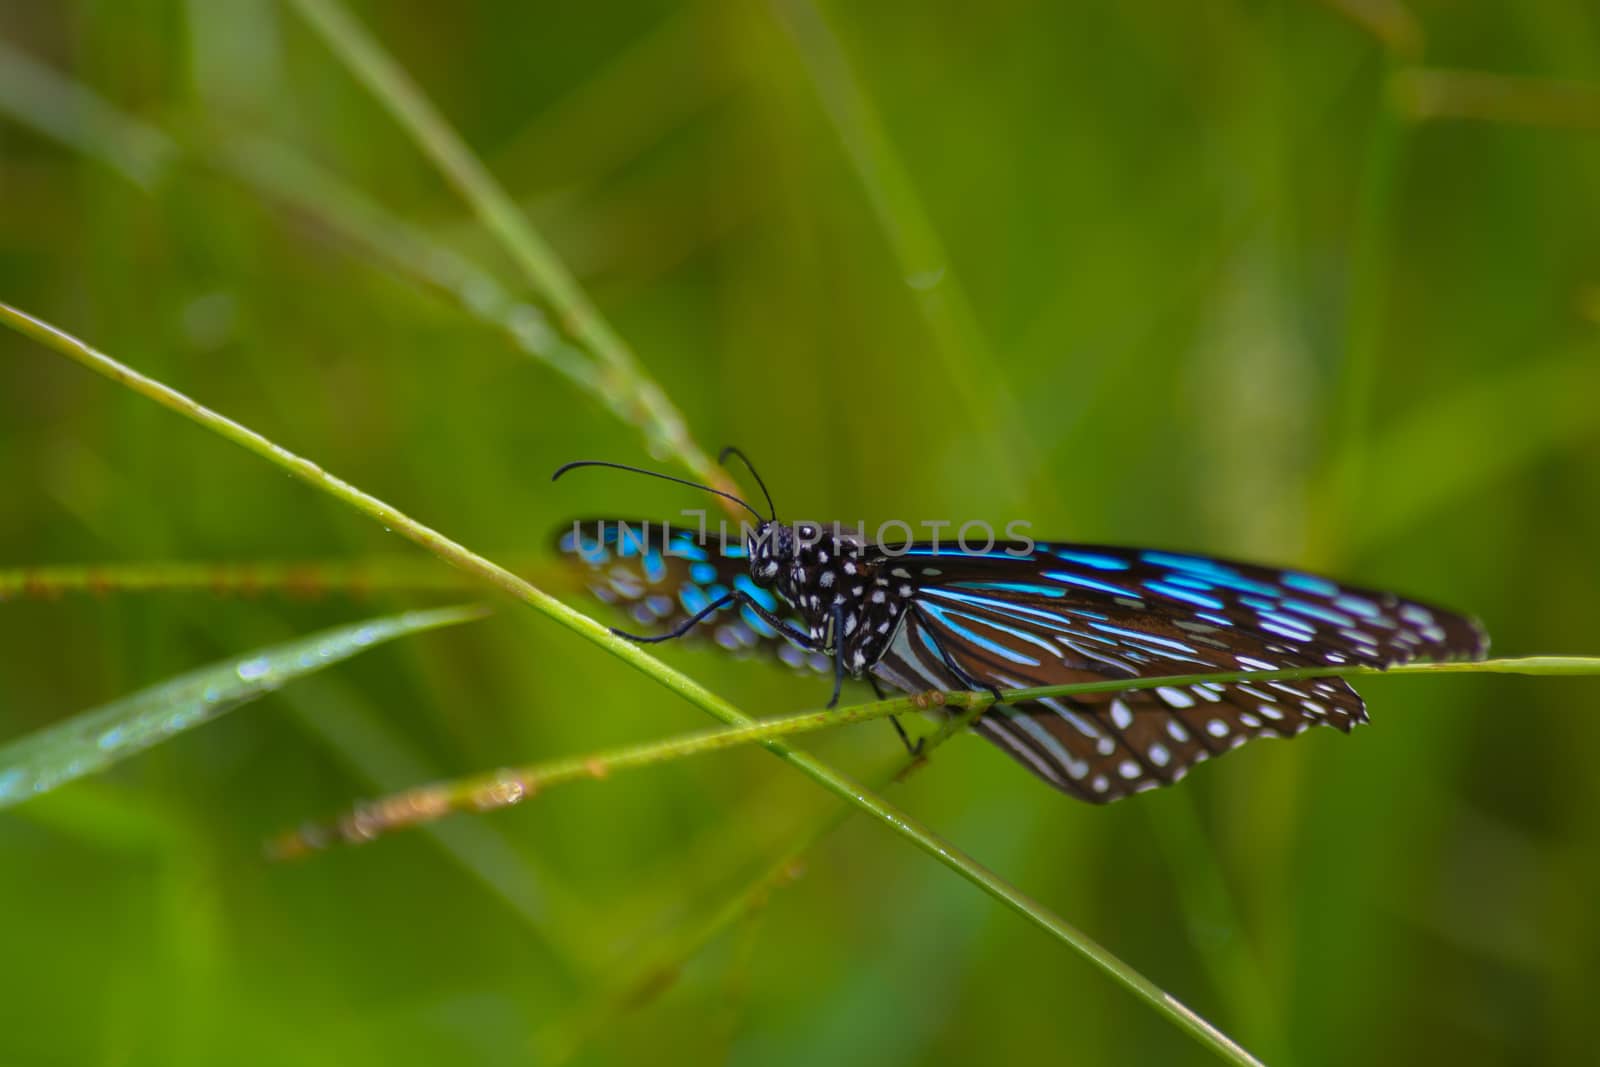 Dark Blue Tiger butterfly, Tirumala septentrionis on grass stem.